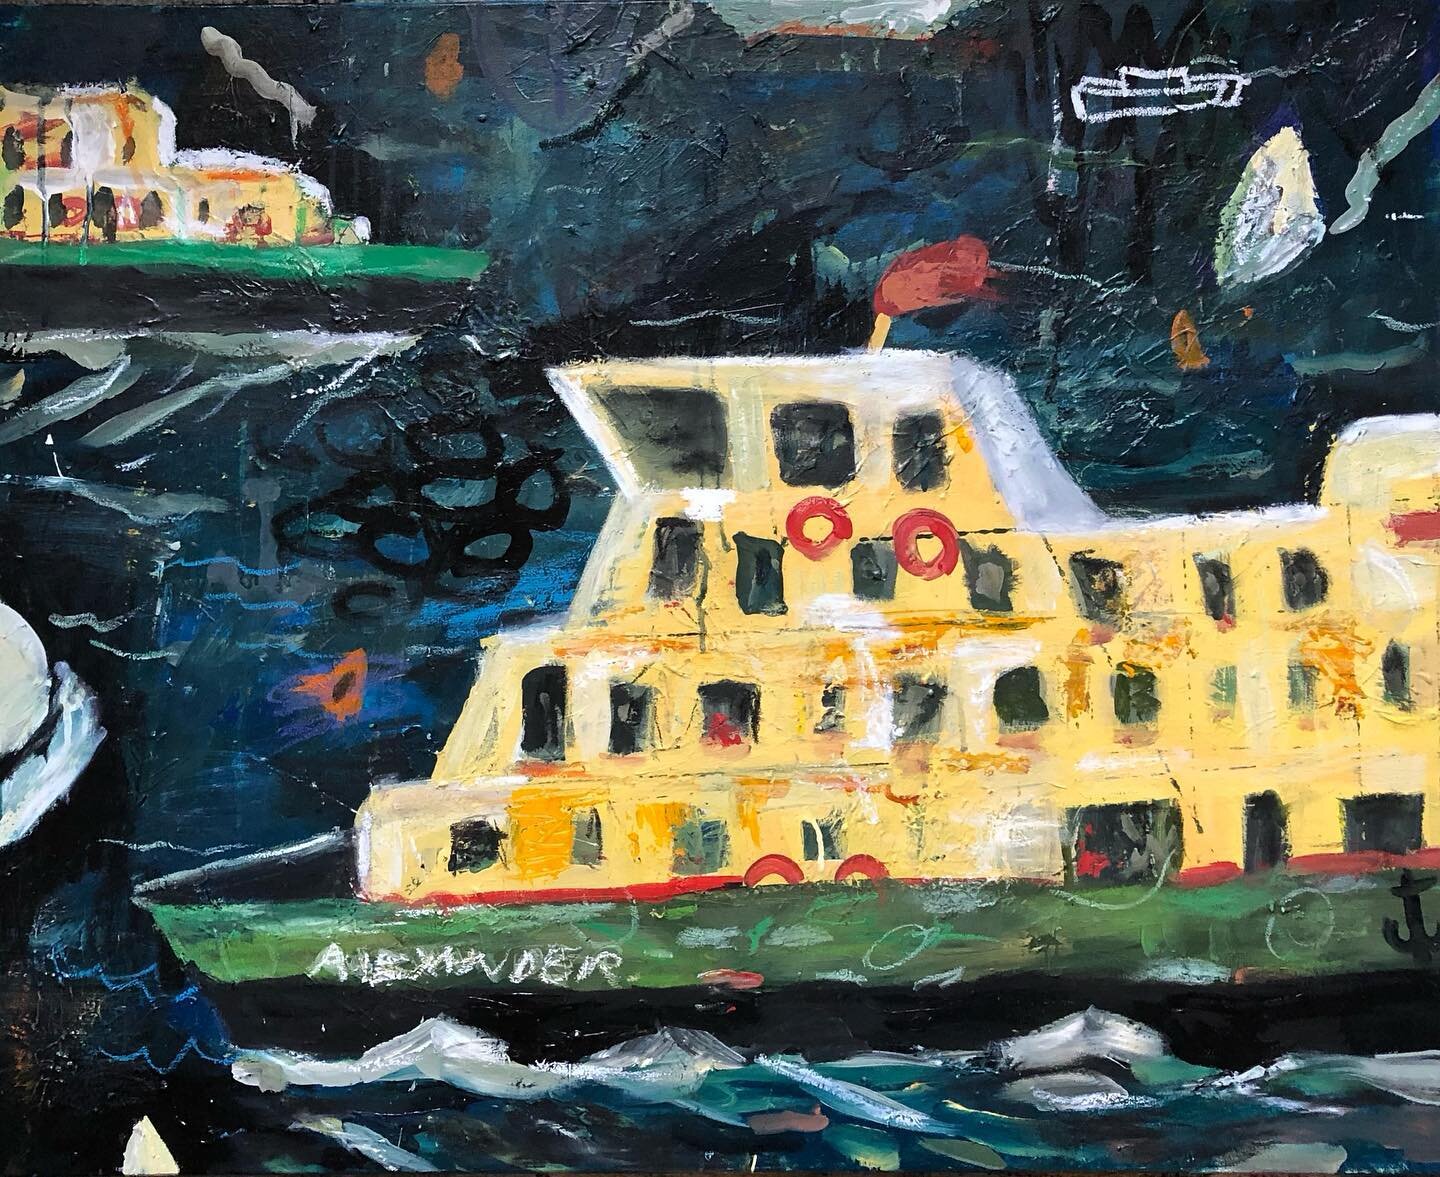 Ferry Ride
.
.
.
.
.
#art #art2life #artsy #artgallery #art2lifecvp #art2lifeacademy #art2life_world #instaart #boatart #ship #sea #ferry #sydneyferries #sydneyferry #naughtical #boatart